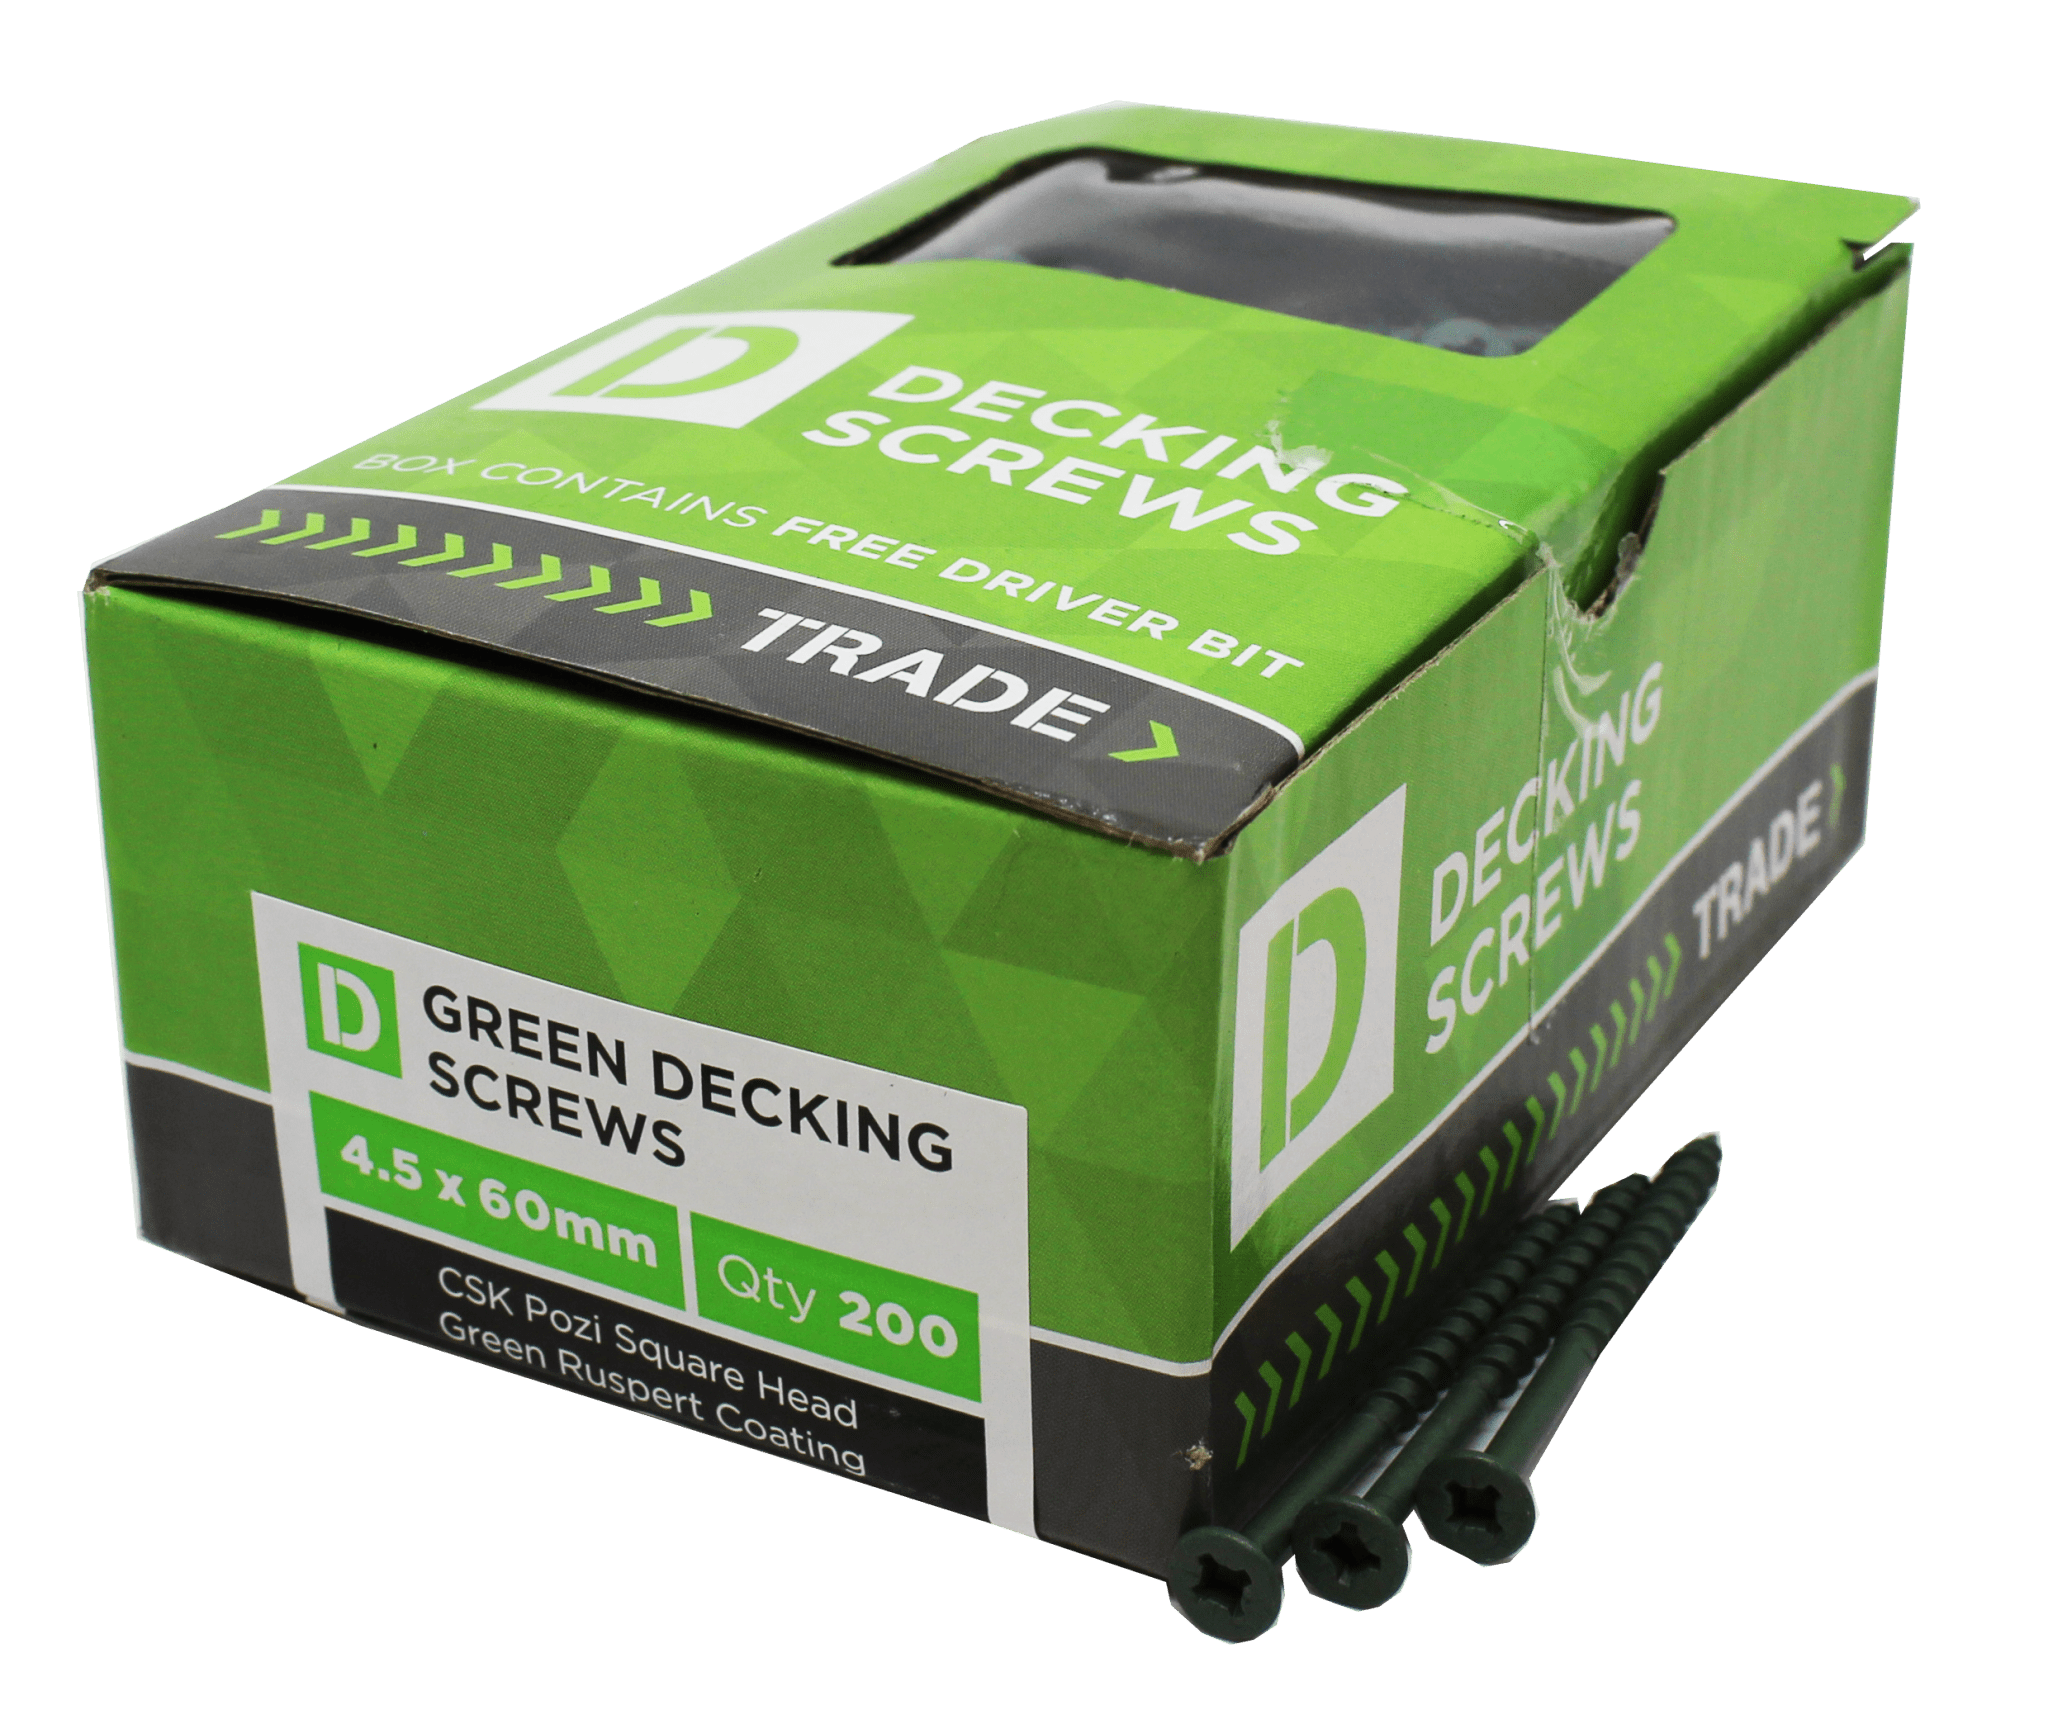 Deckings Screw - Pozi Drive - Exterior Green Coating - Box